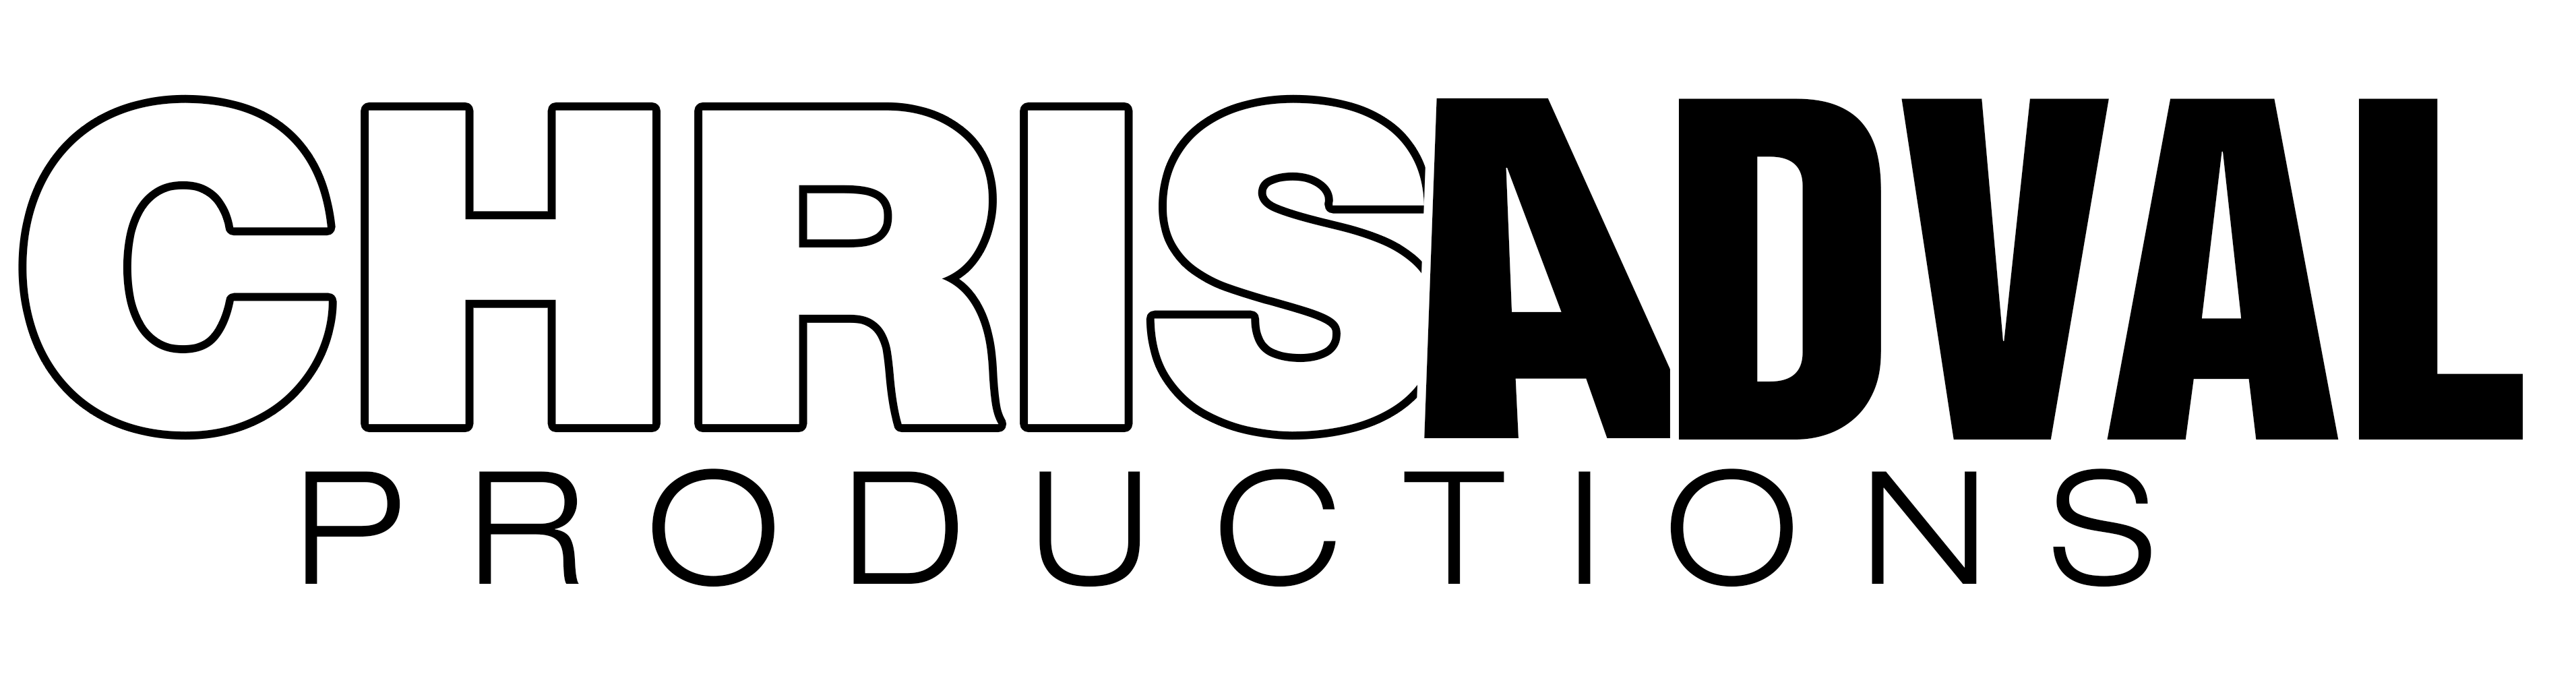 Chris Adval Productions